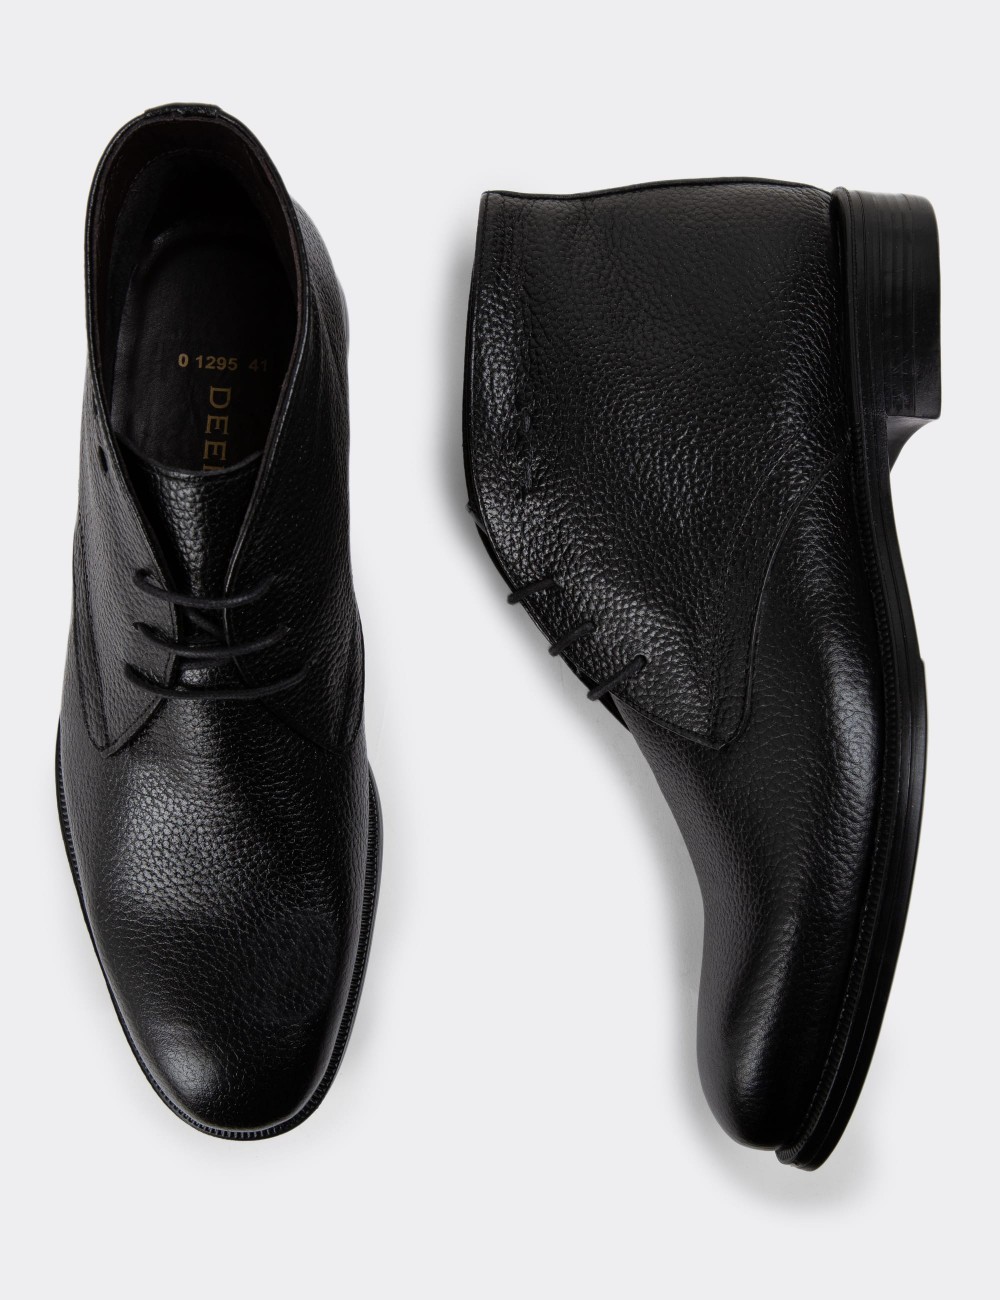 Black Leather Desert Boots - 01295MSYHC14